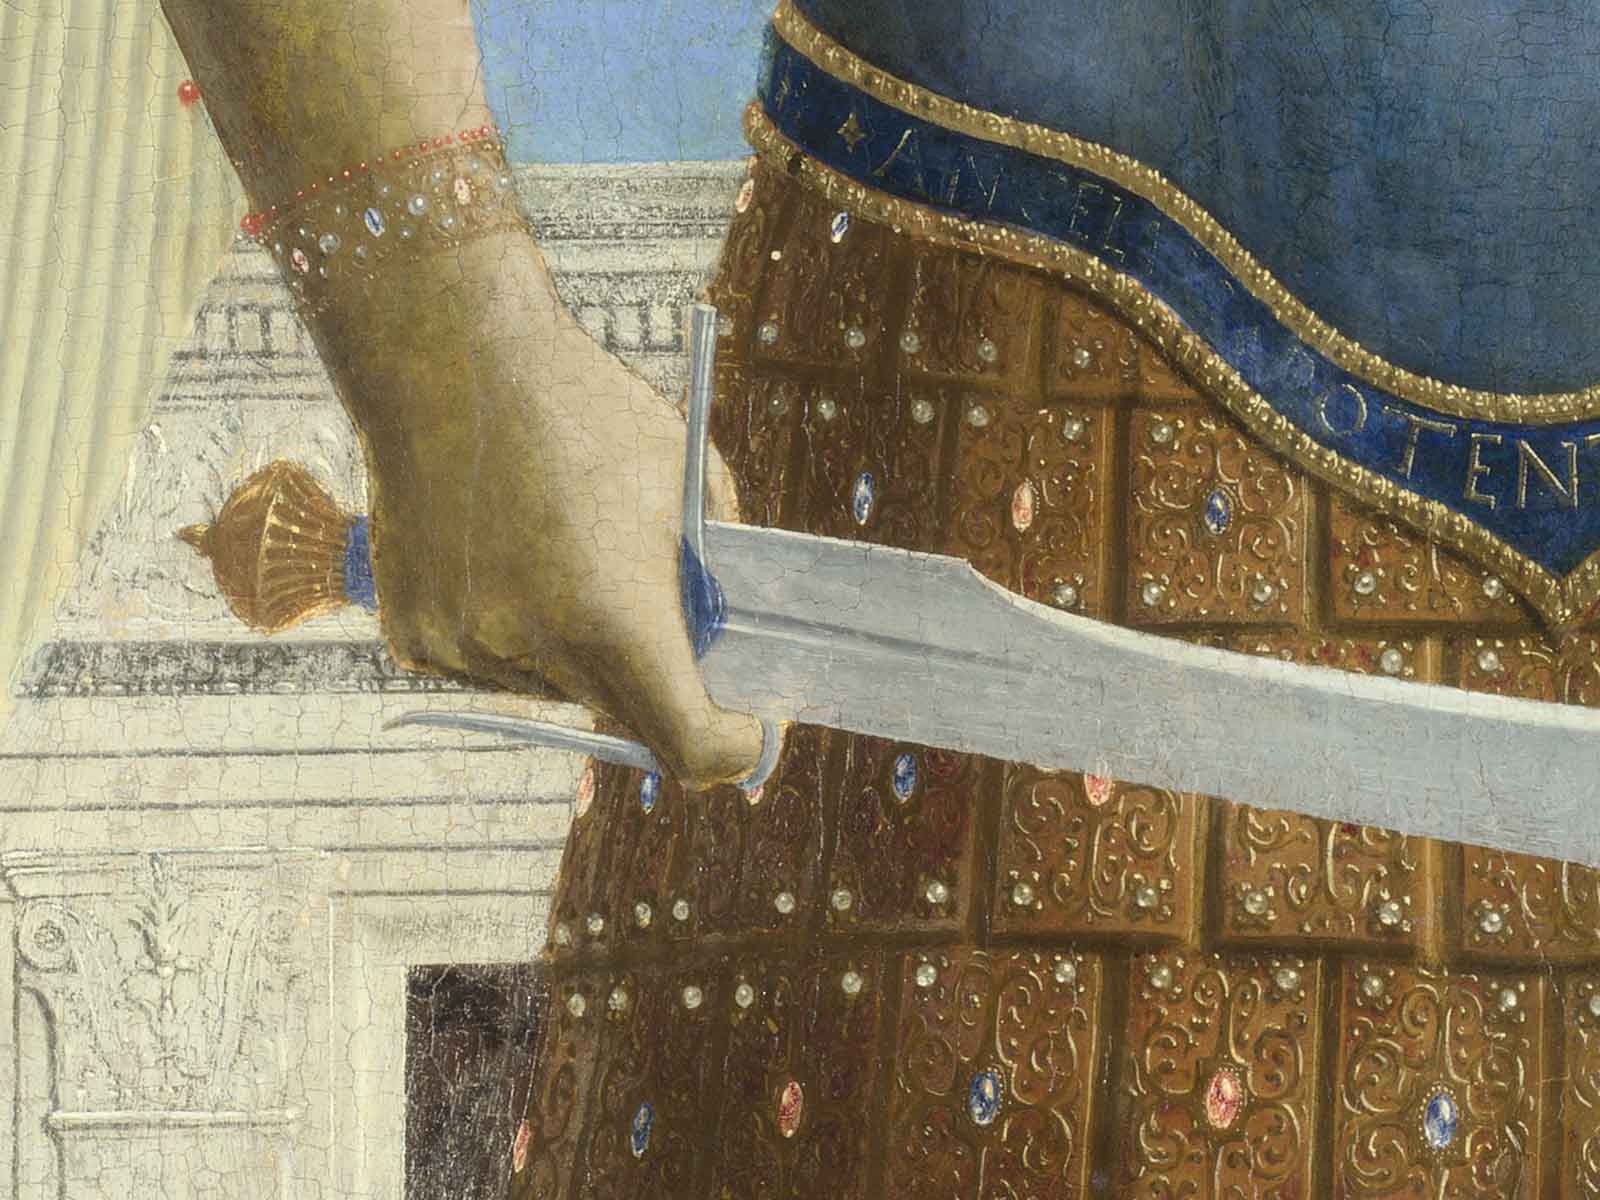 San Michele Arcangelo, Piero della Francesca. The National Gallery, Londra